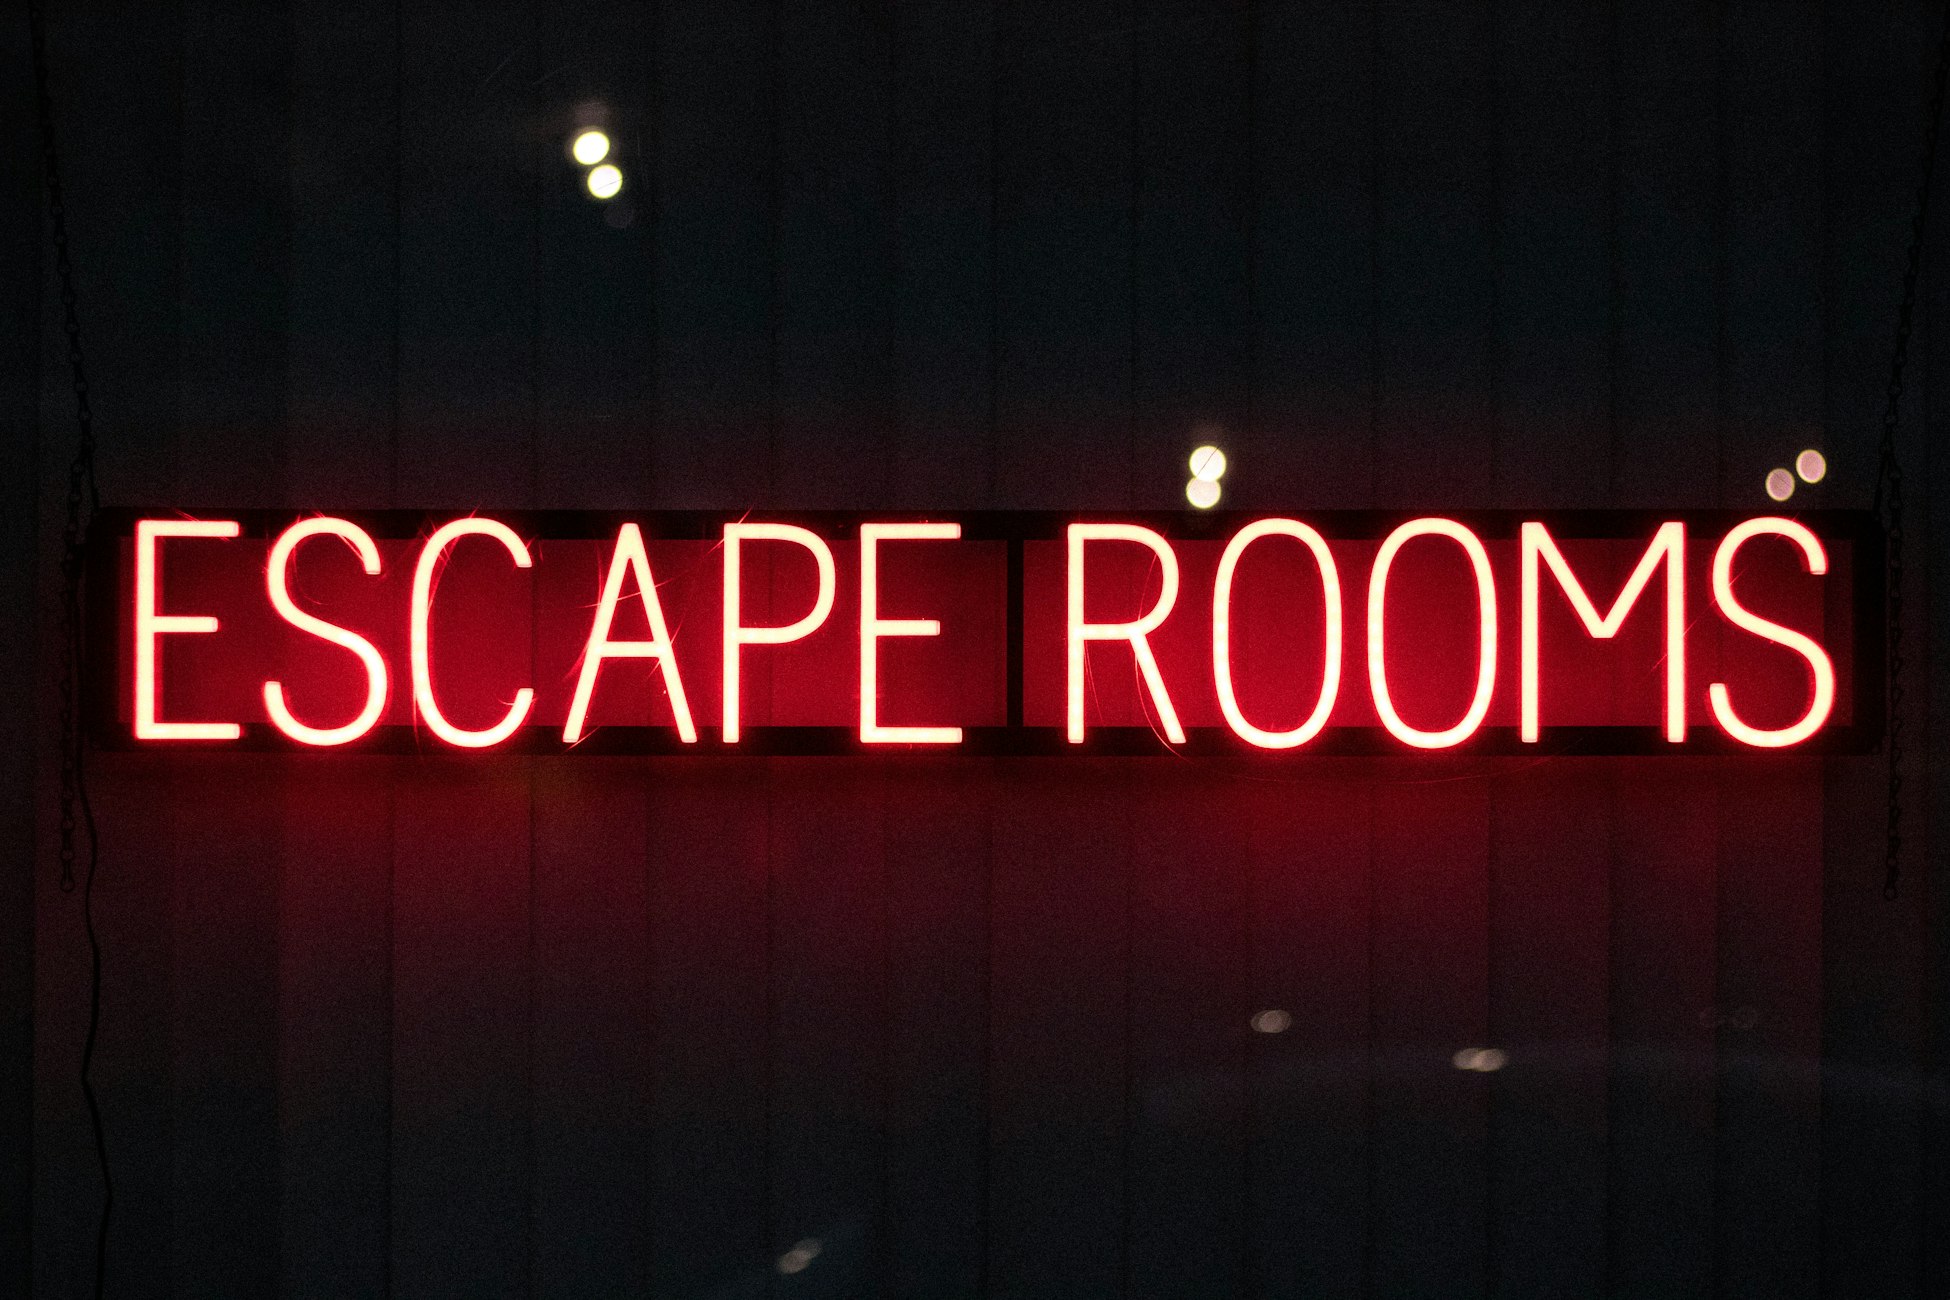 HBO's event marketing campaign - escape rooms